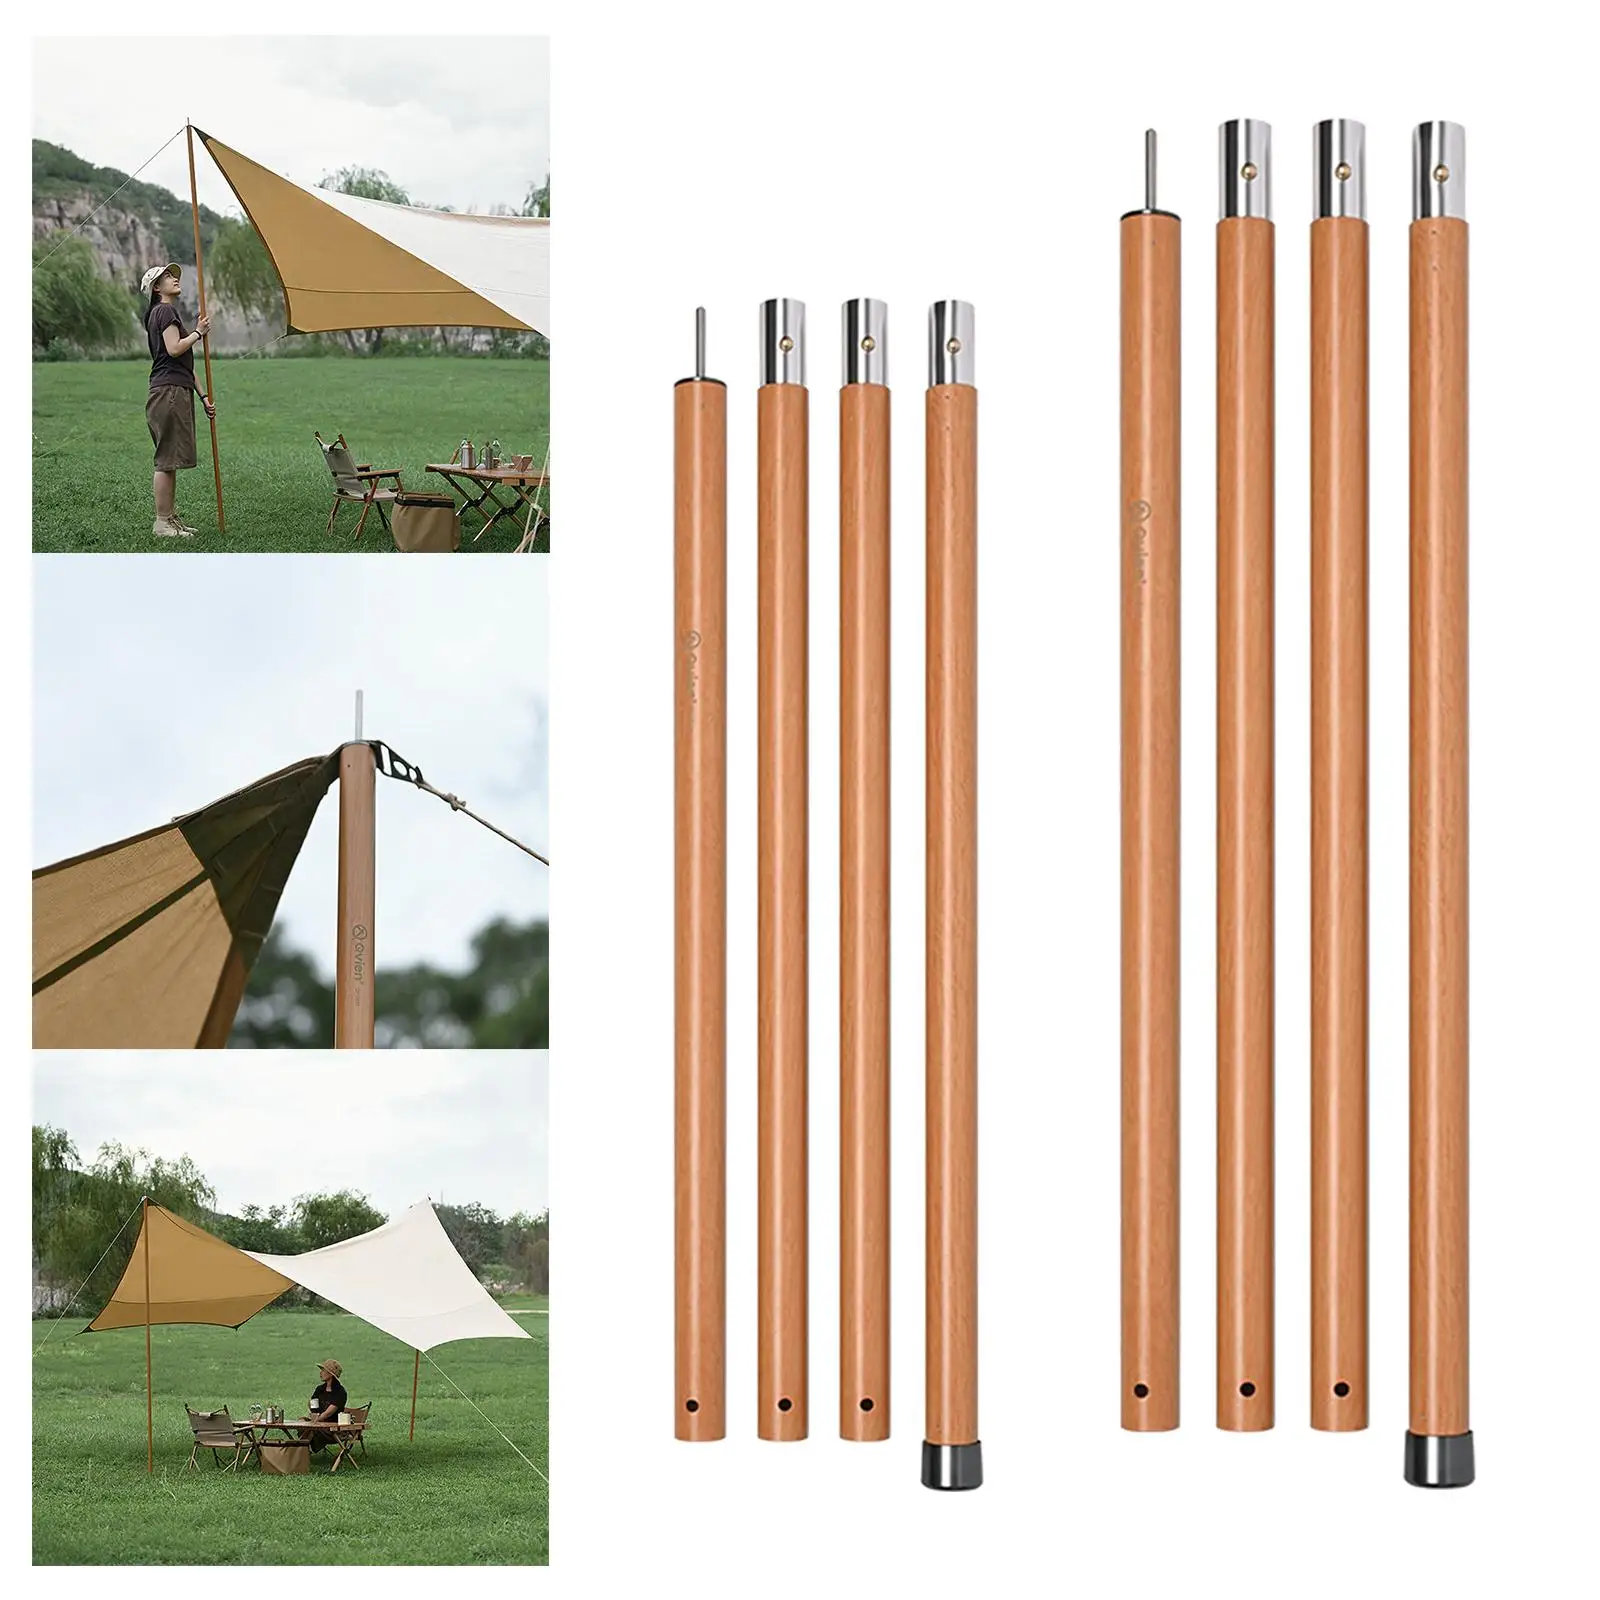 Telescoping Tent Poles Aluminum Alloy Support Rod for Tarp Trekking Hiking